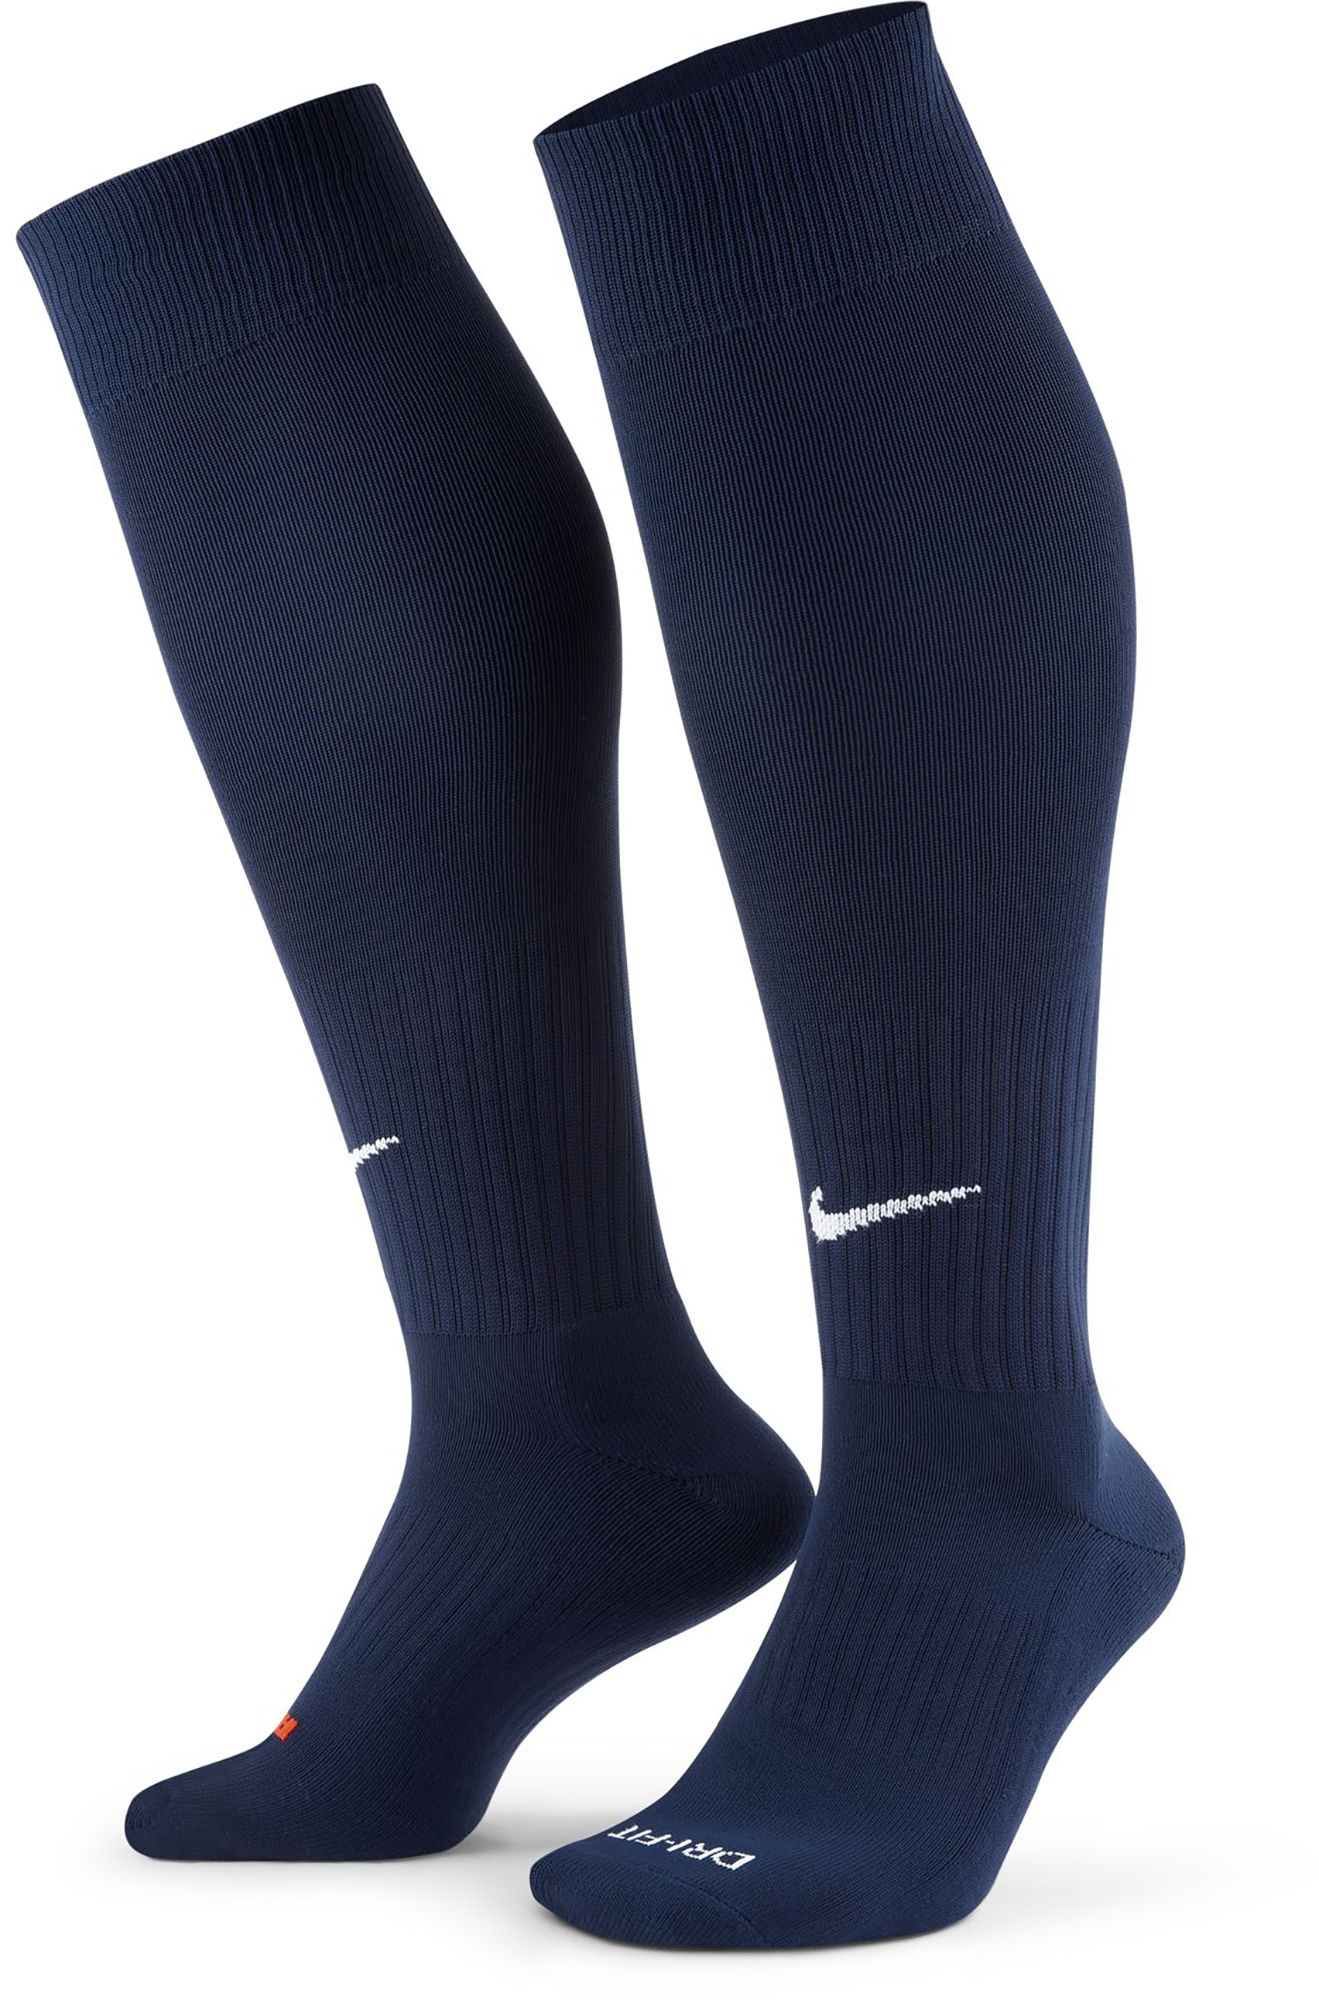 nike classic soccer socks size chart